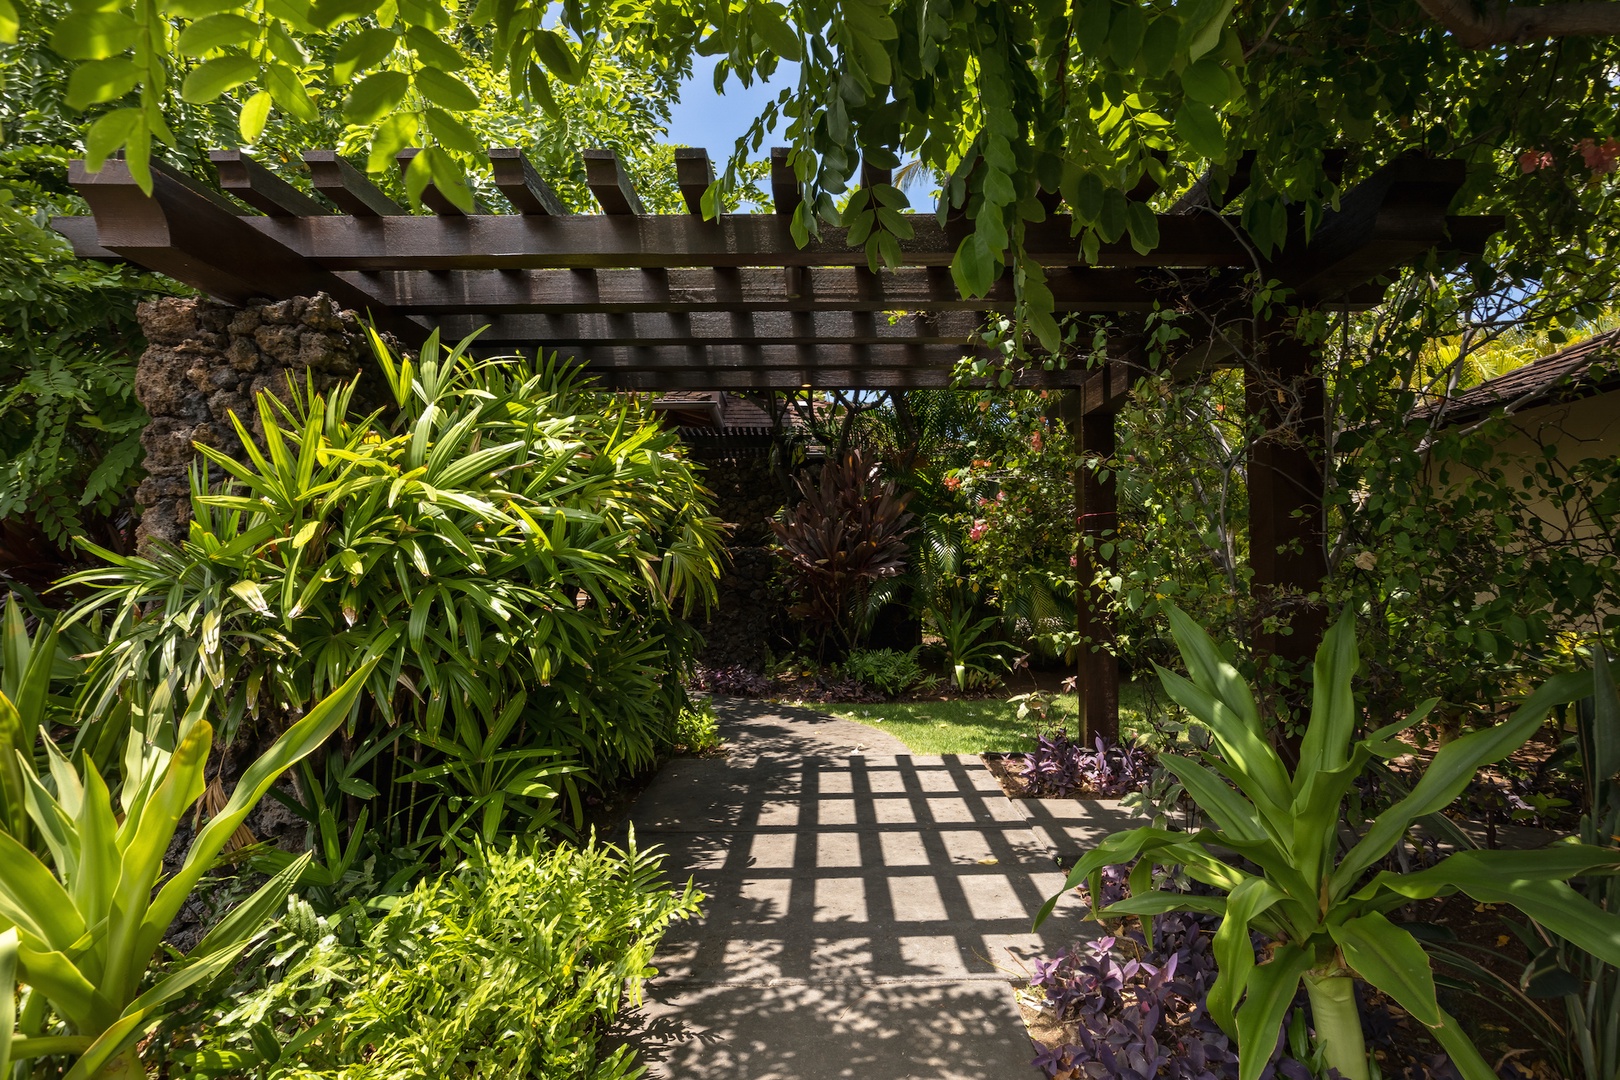 Kailua Kona Vacation Rentals, 2BD Hali'ipua Villa (108) at Four Seasons Resort at Hualalai - Exterior entryway leading to front door with lush tropical landscaping.